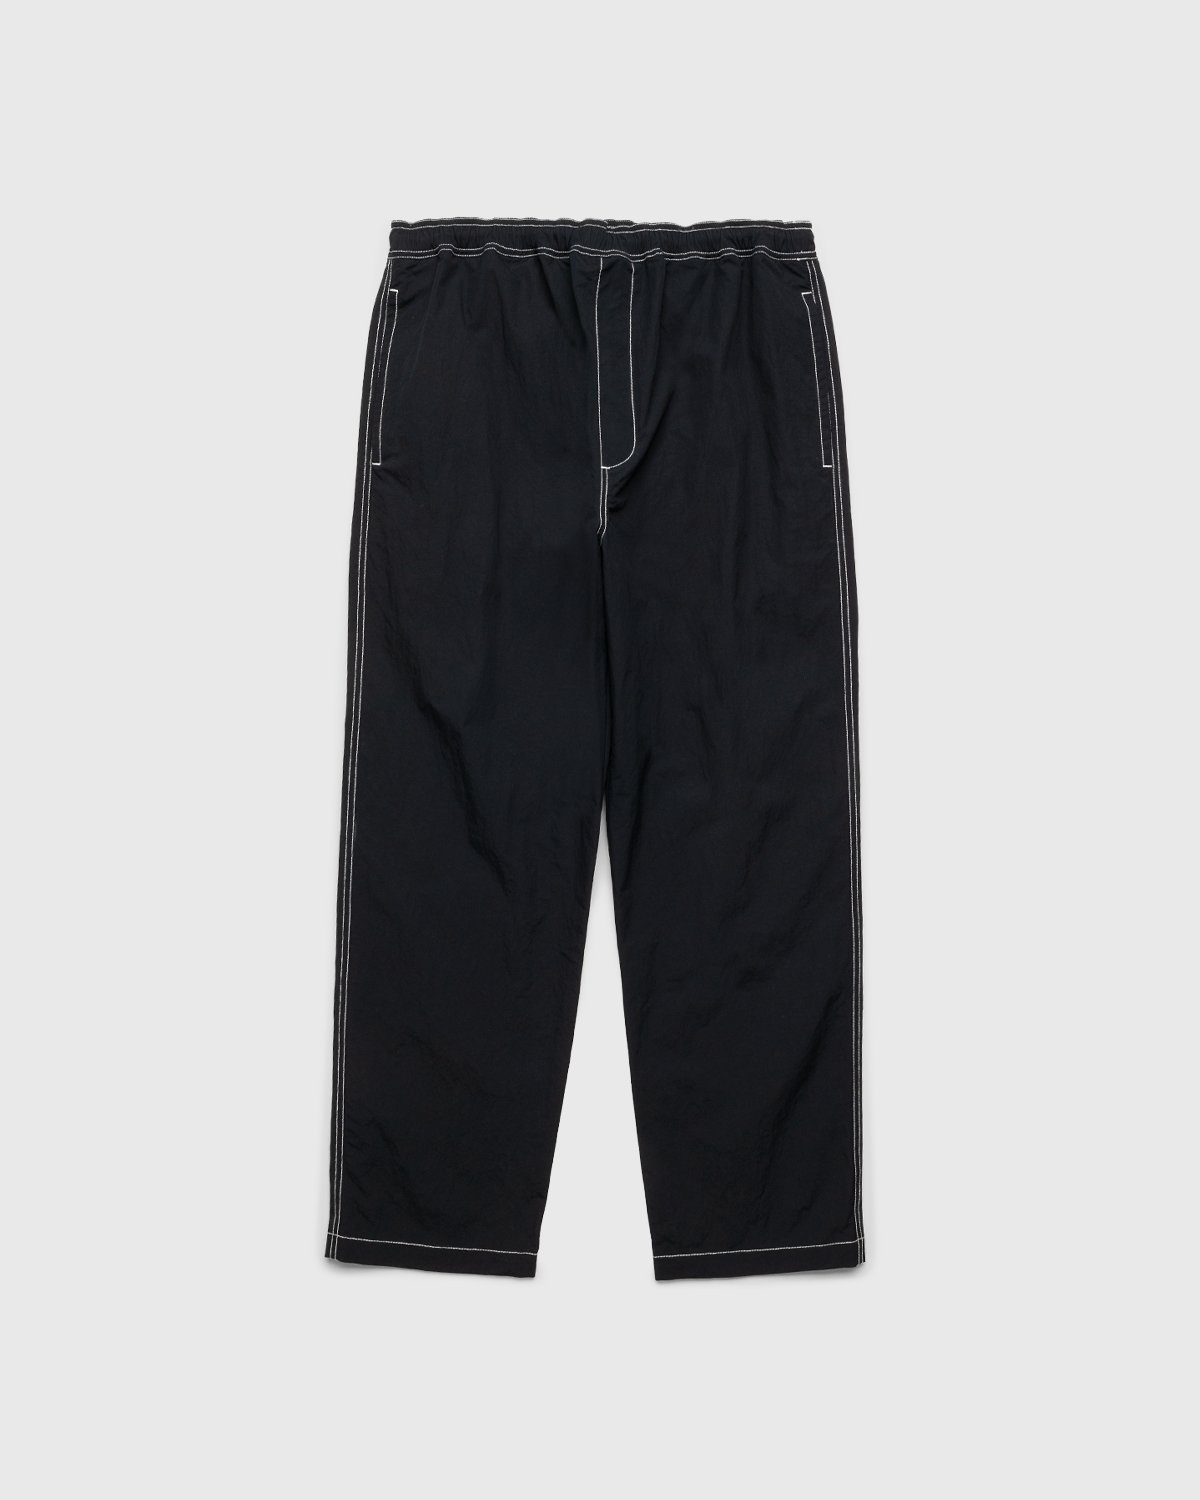 Highsnobiety – Contrast Brushed Nylon Elastic Pants Black - Active Pants - Black - Image 1